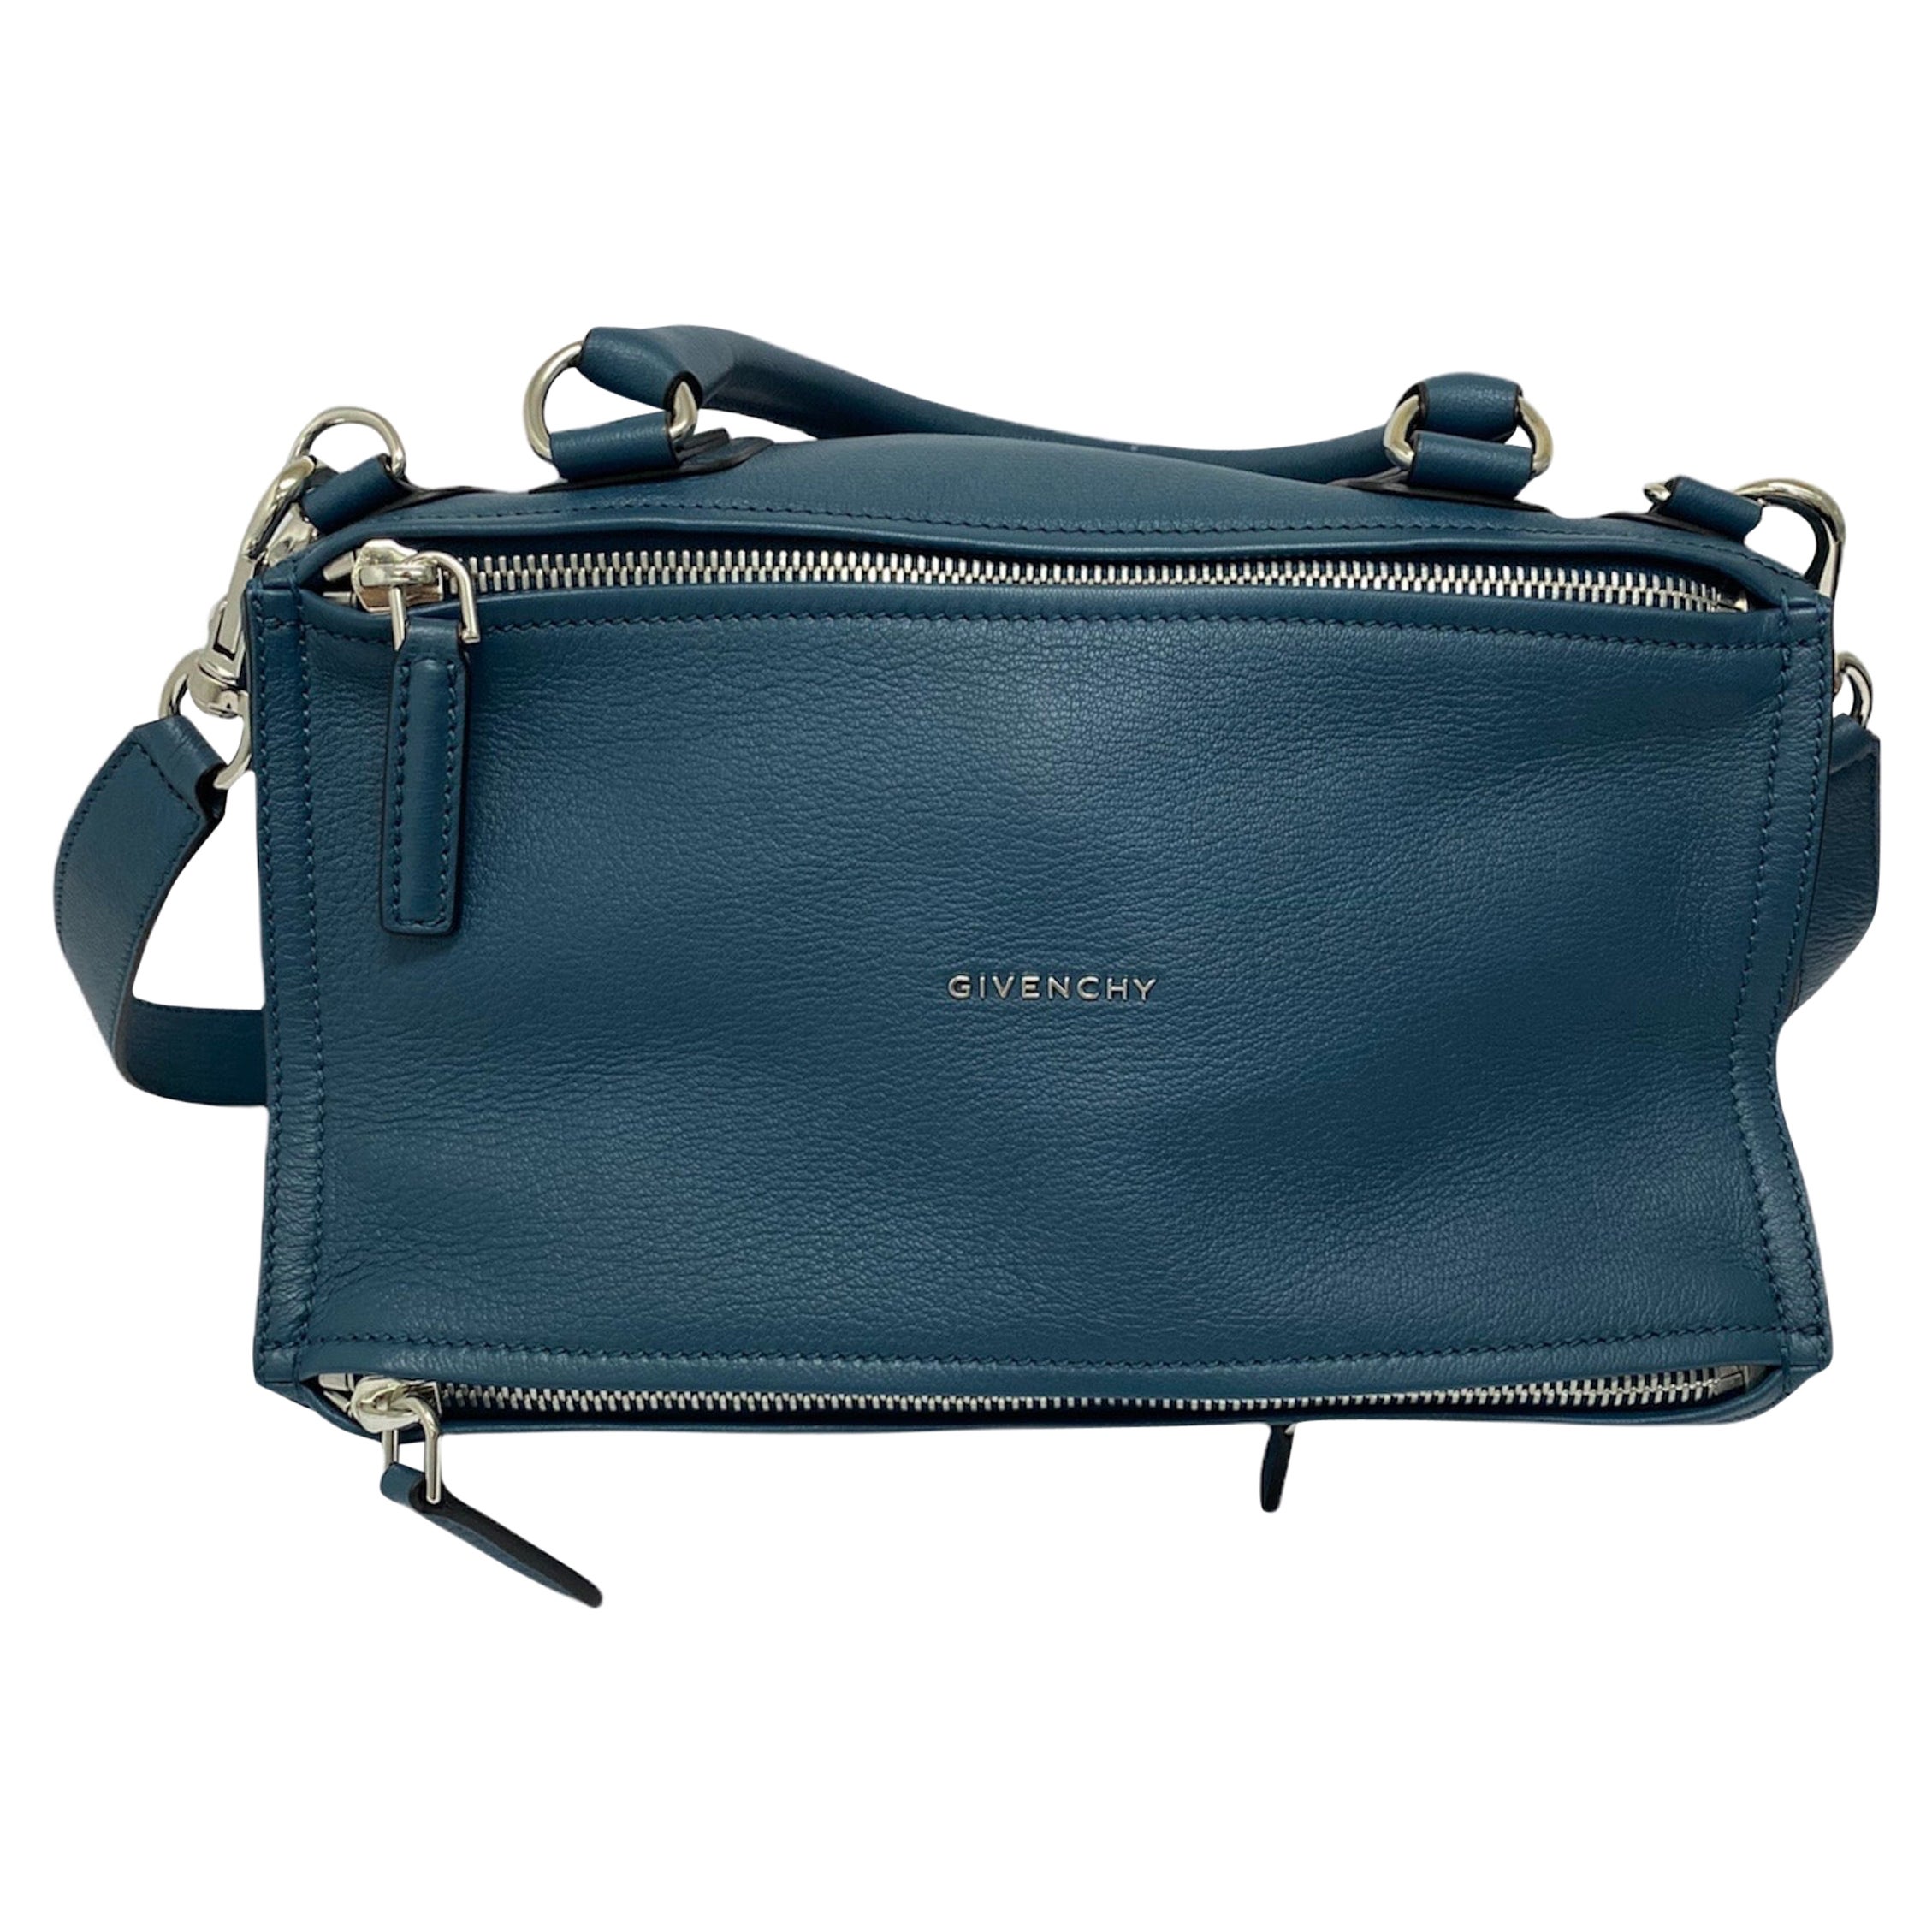 Givenchy Blue Leather Pandora Bag